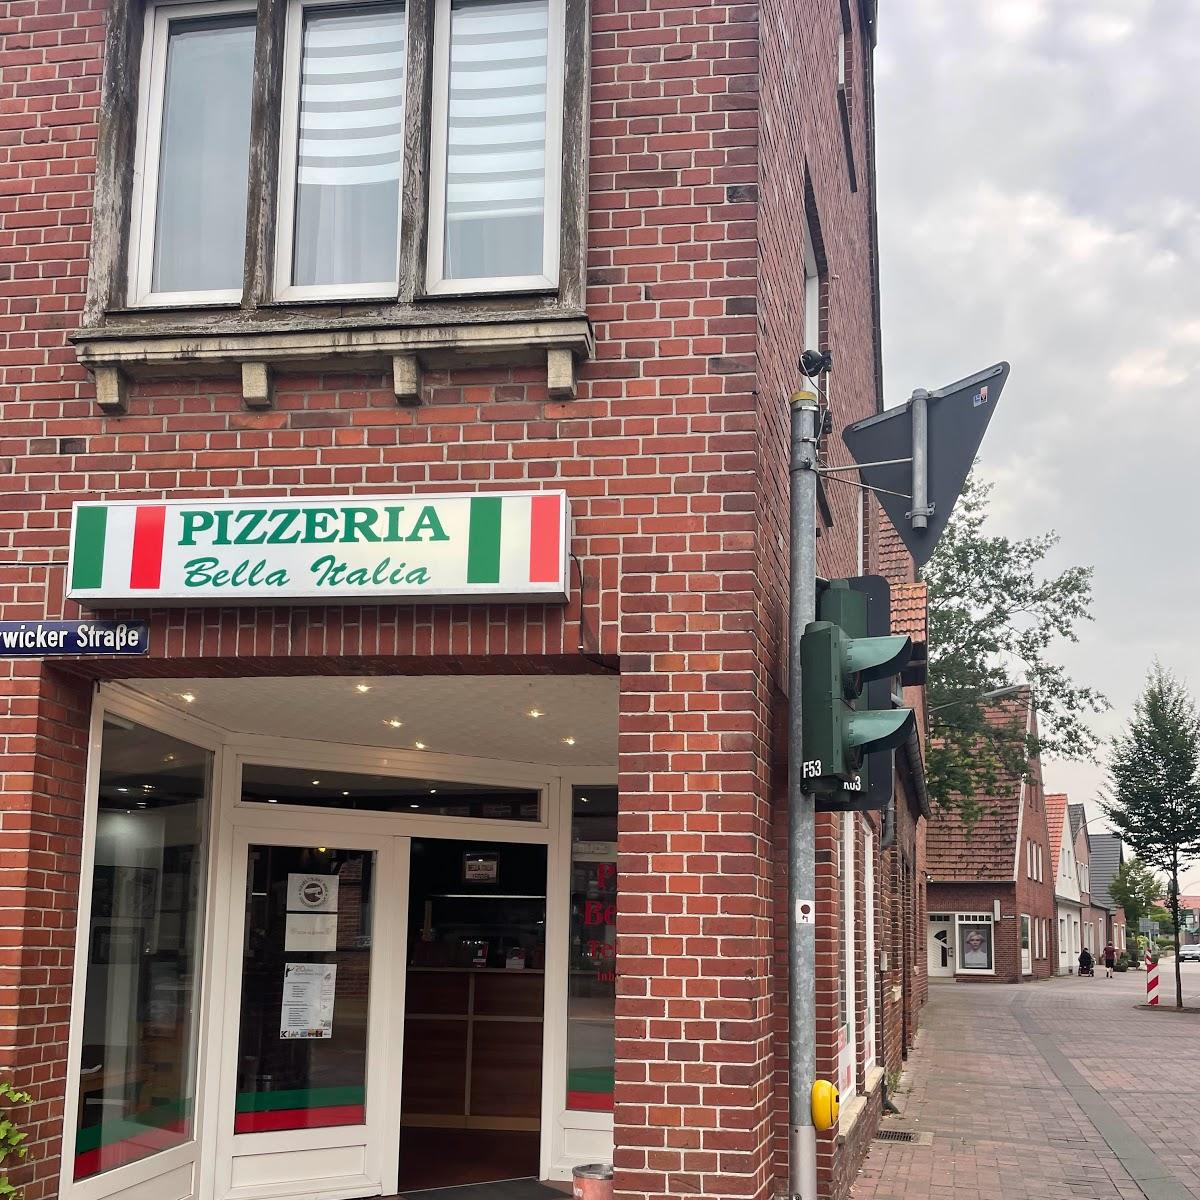 Restaurant "Pizzeria Bella Italia" in Legden